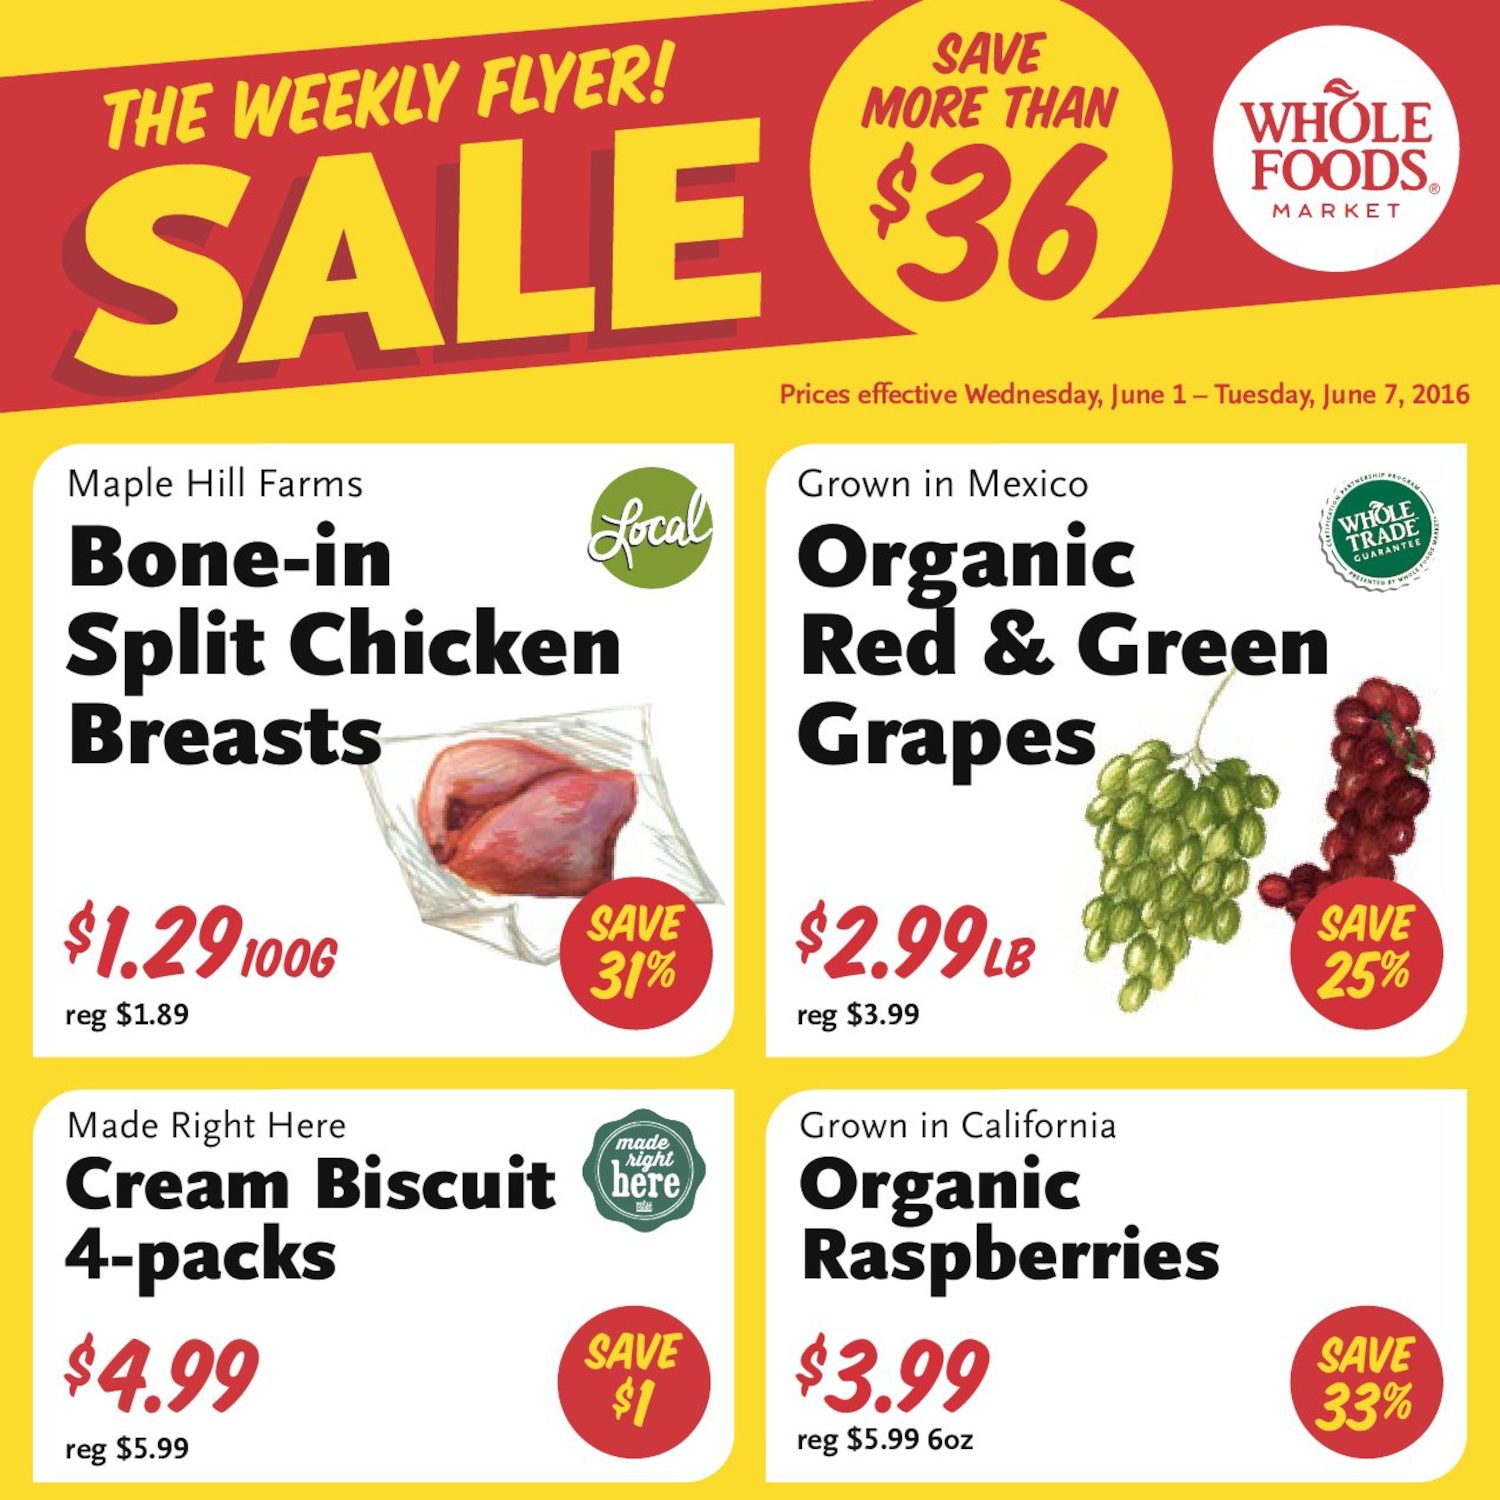 Whole Foods Market Weekly Flyer - RedFlagDeals.com.